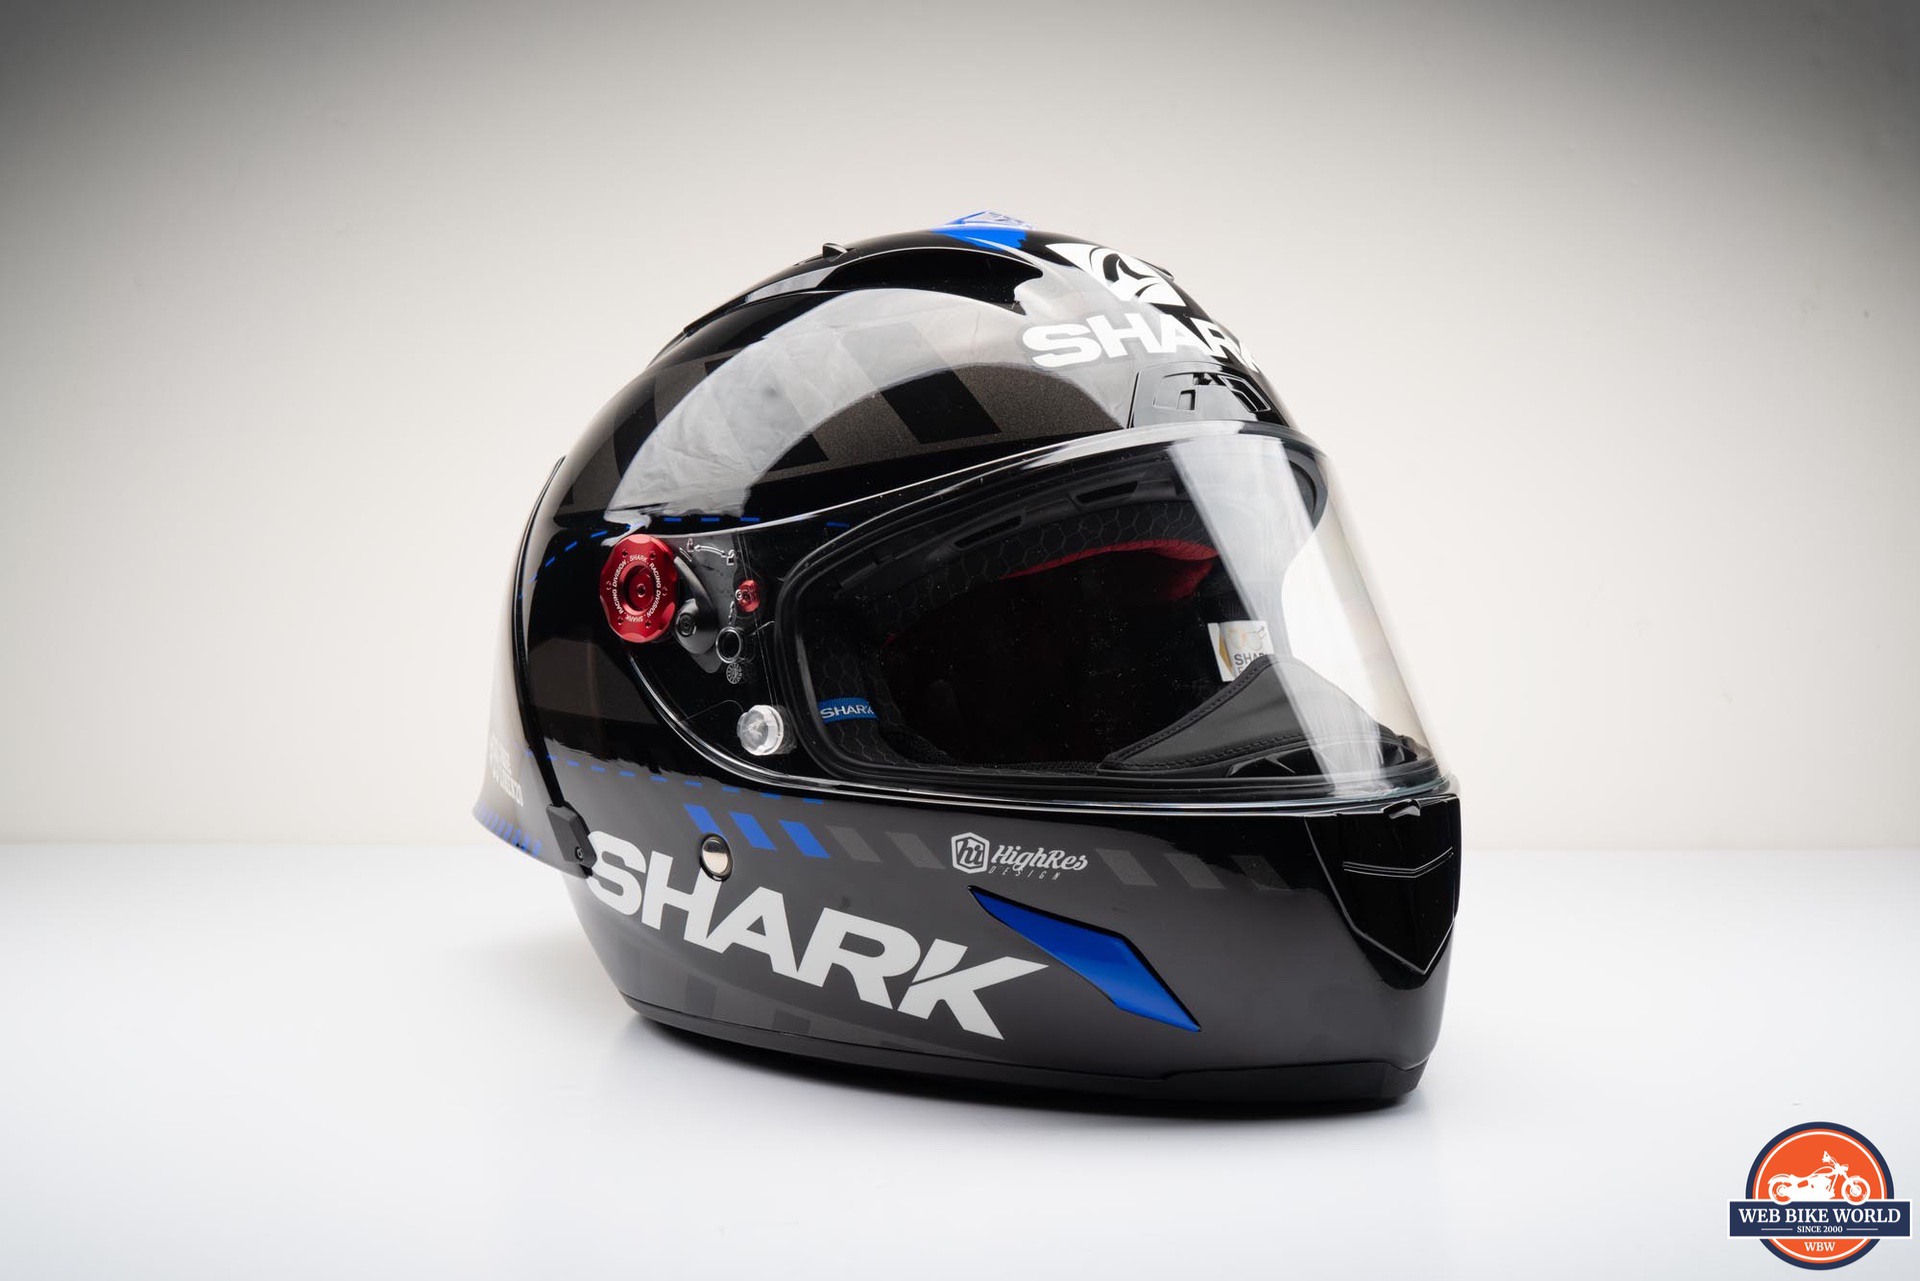 REVIEW] Race-R Pro GP Spoiler Lorenzo Winter Test Edition Helmet